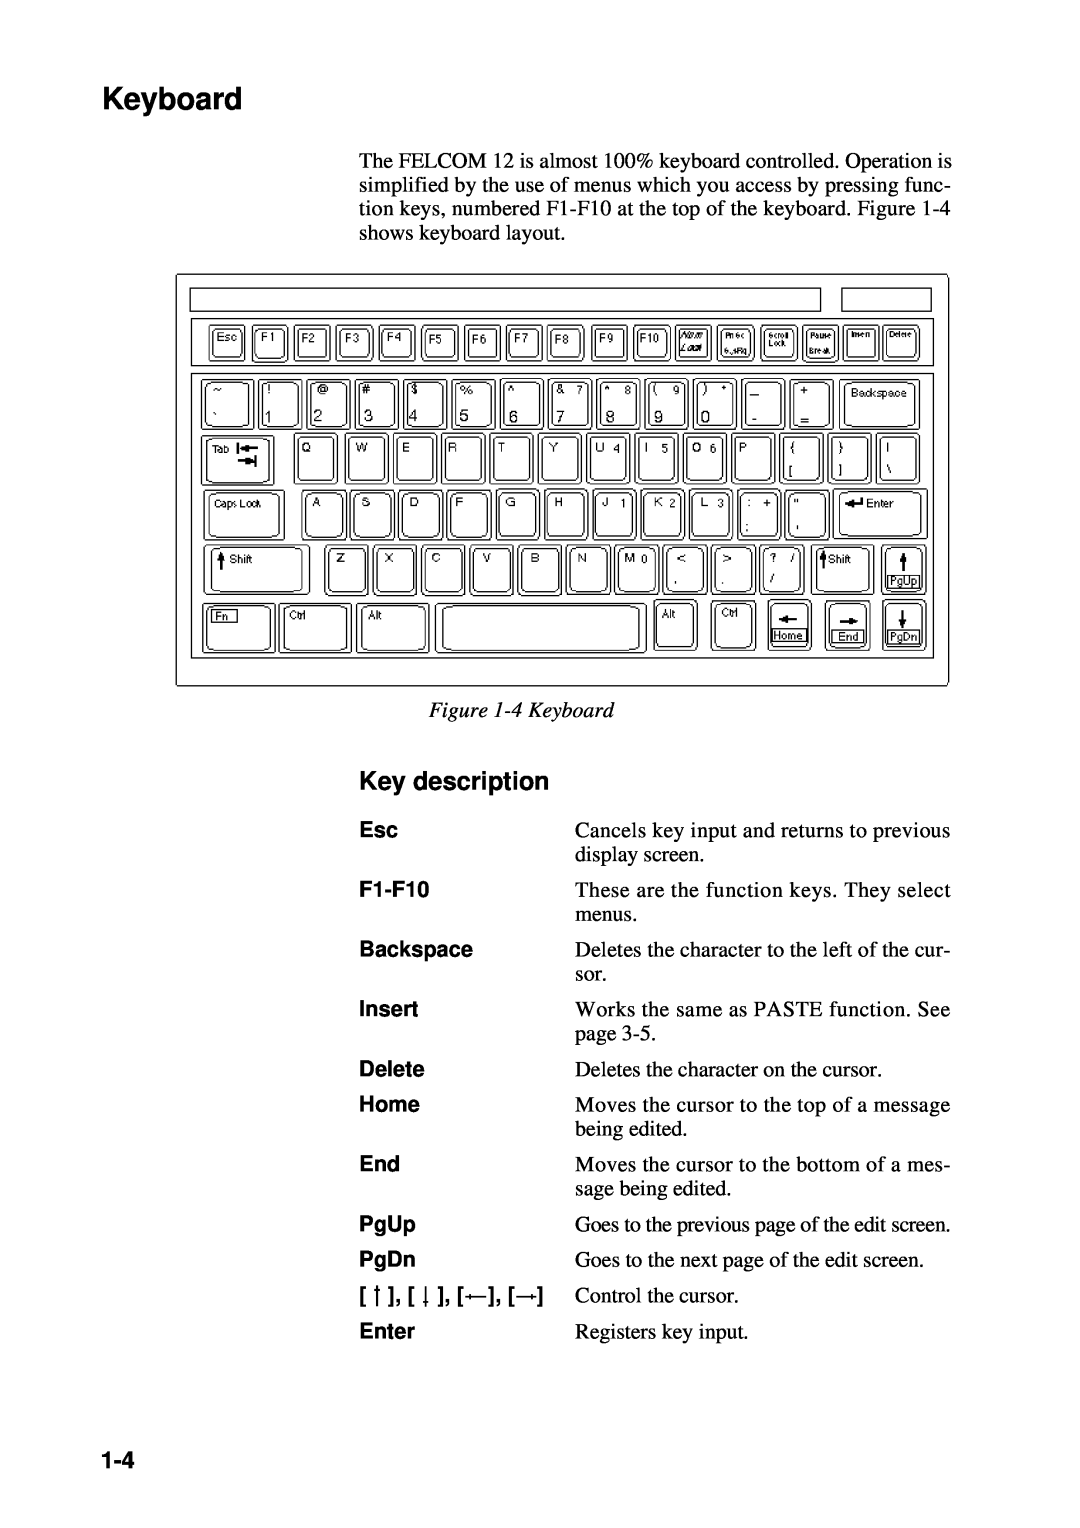 Furuno RC-1500-1T manual Key description, 4 Keyboard, F1-F10, Backspace, Insert, Delete, Home, PgUp, PgDn, Enter 